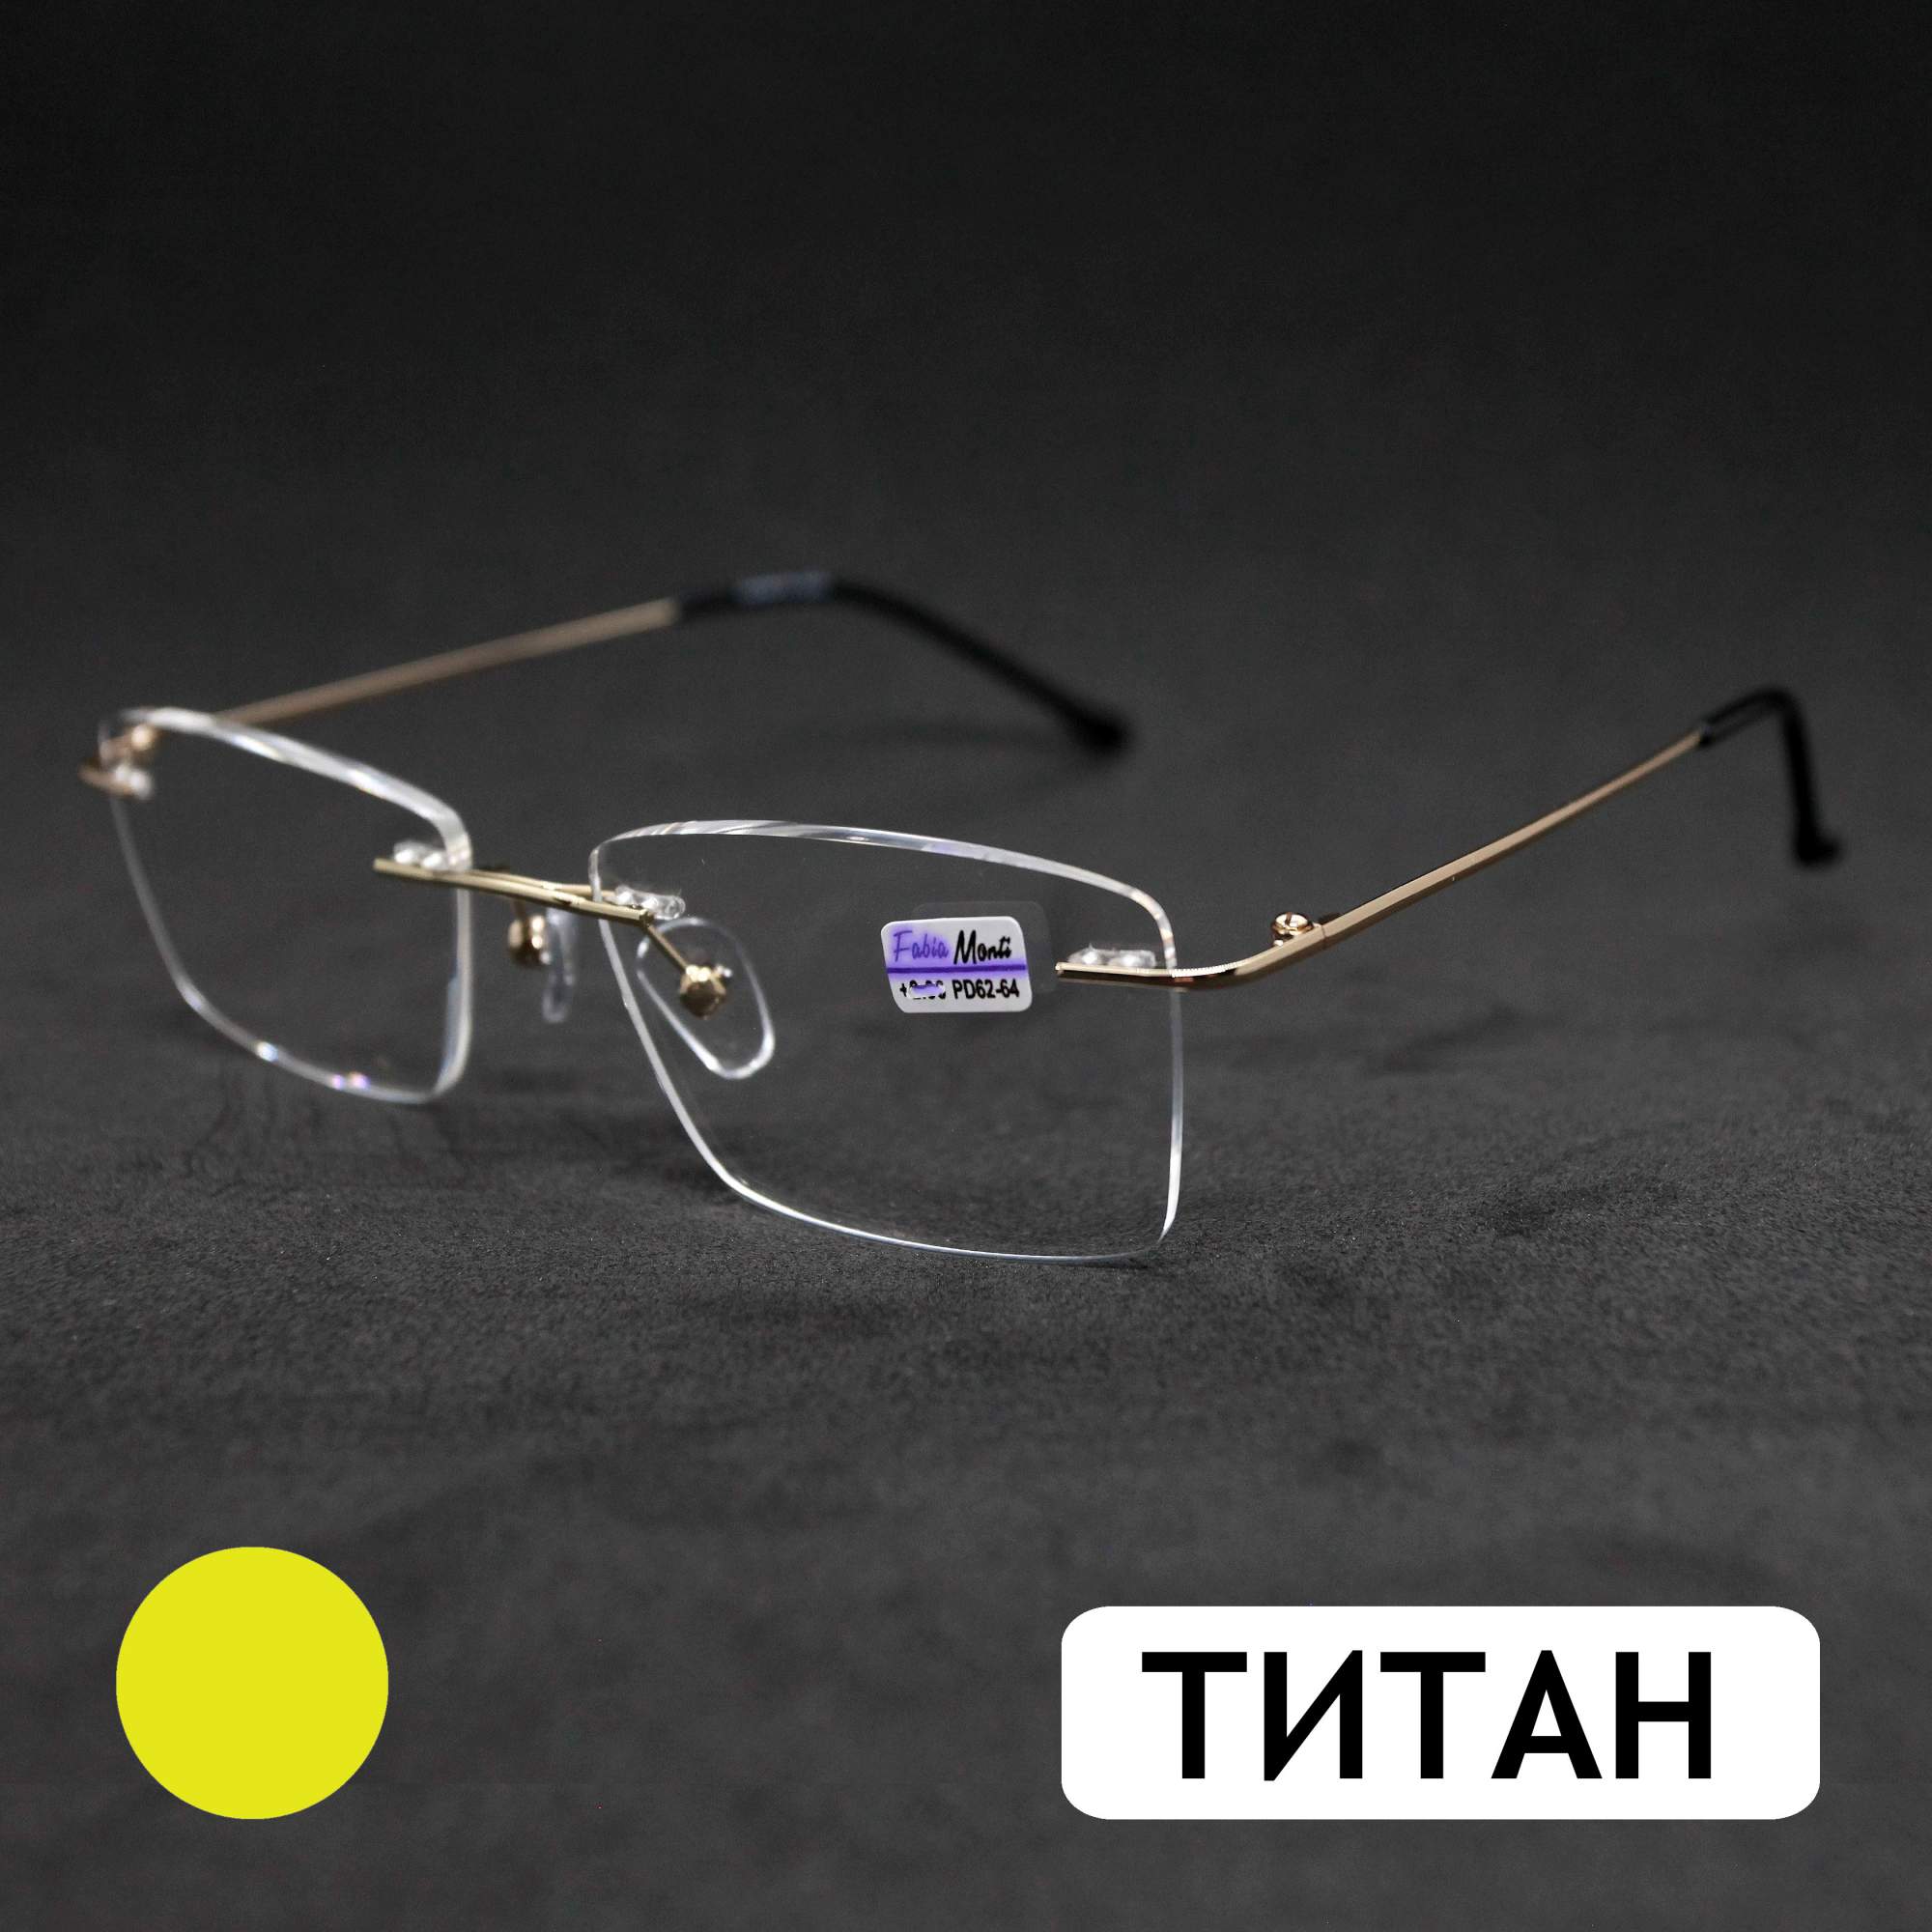 Безободковые очки FM 8959 -4.50, без футляра, оправа титан, золотые, РЦ 62-64